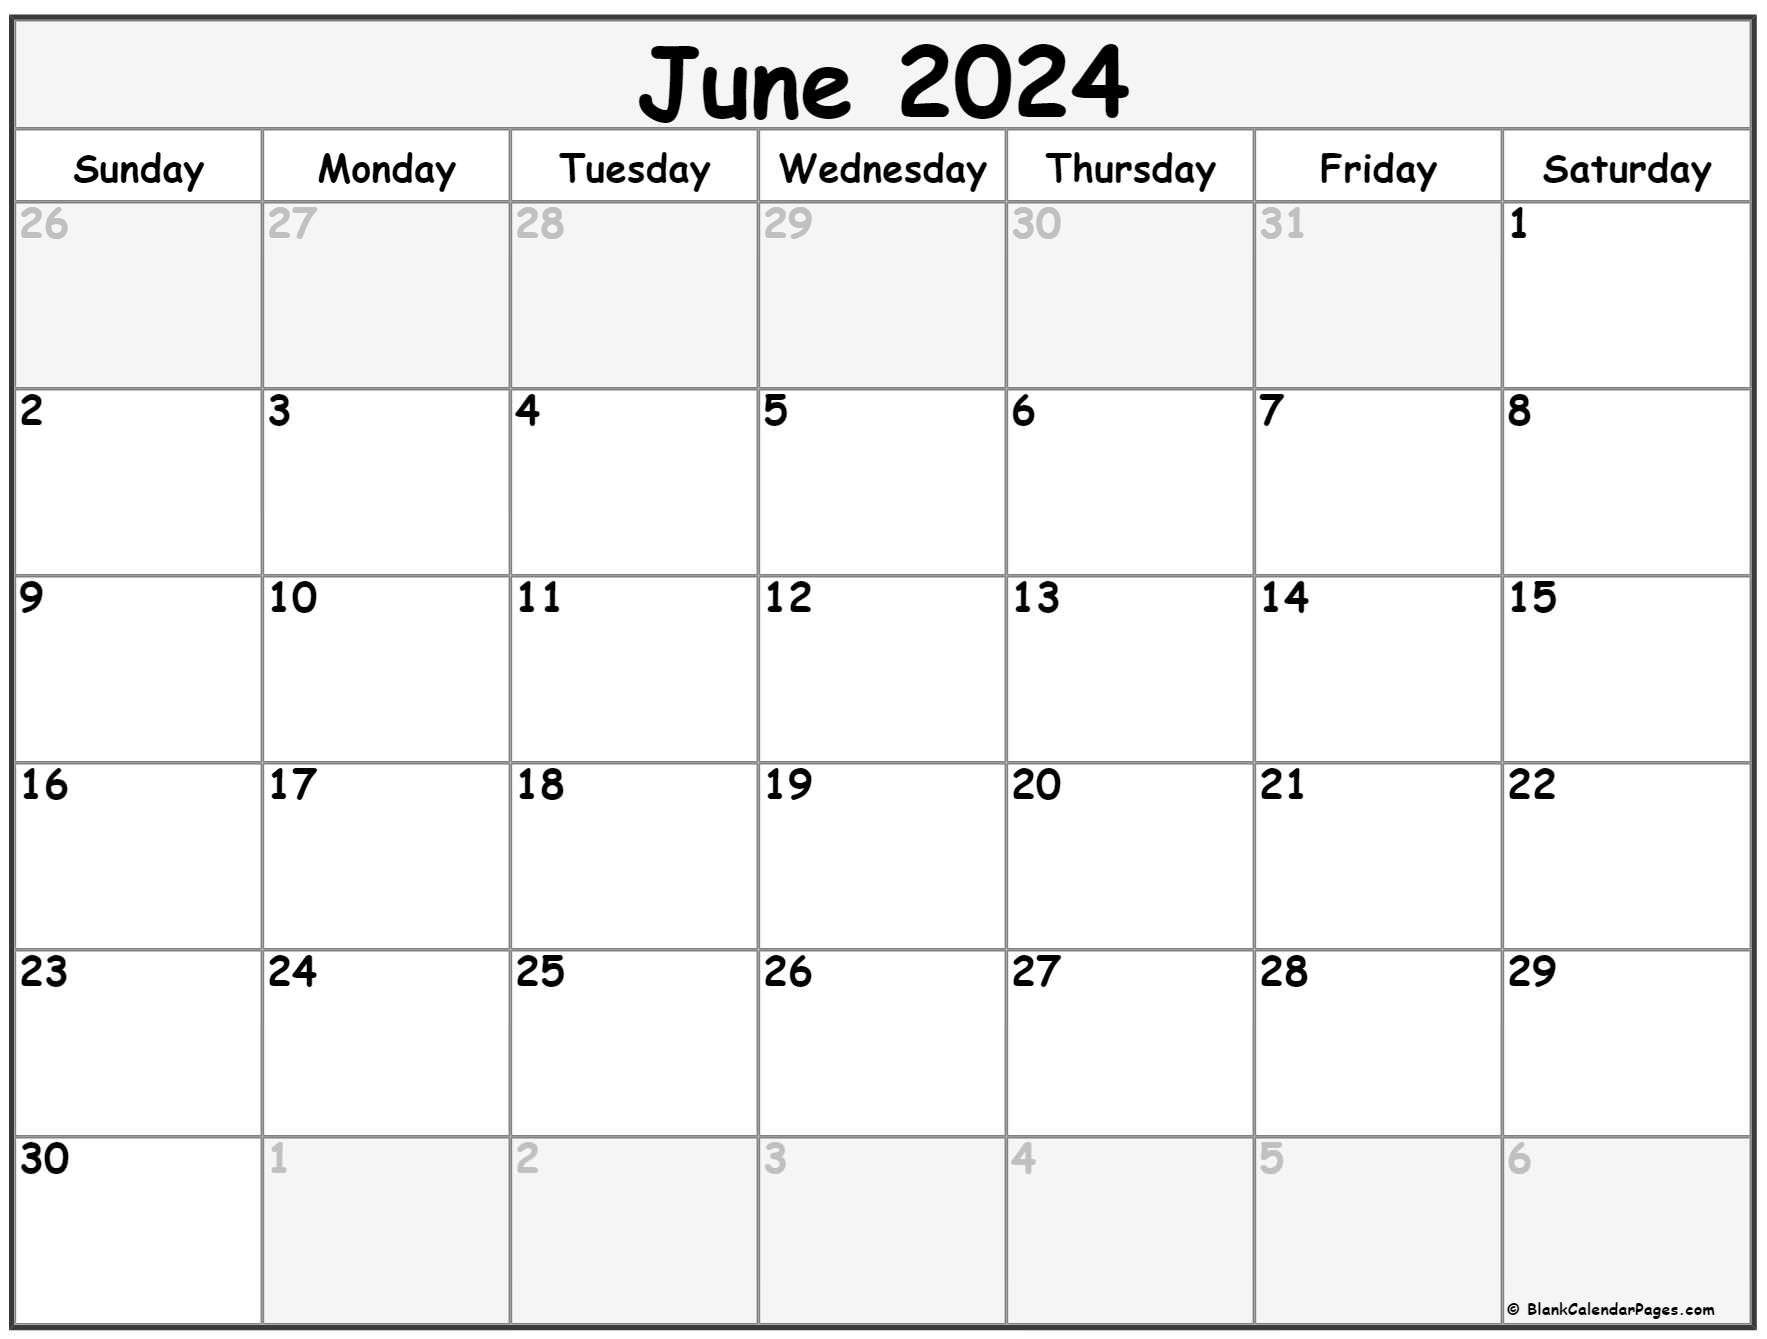 June 2024 Calendar | Free Printable Calendar for Calendar June 2024 Free Printable